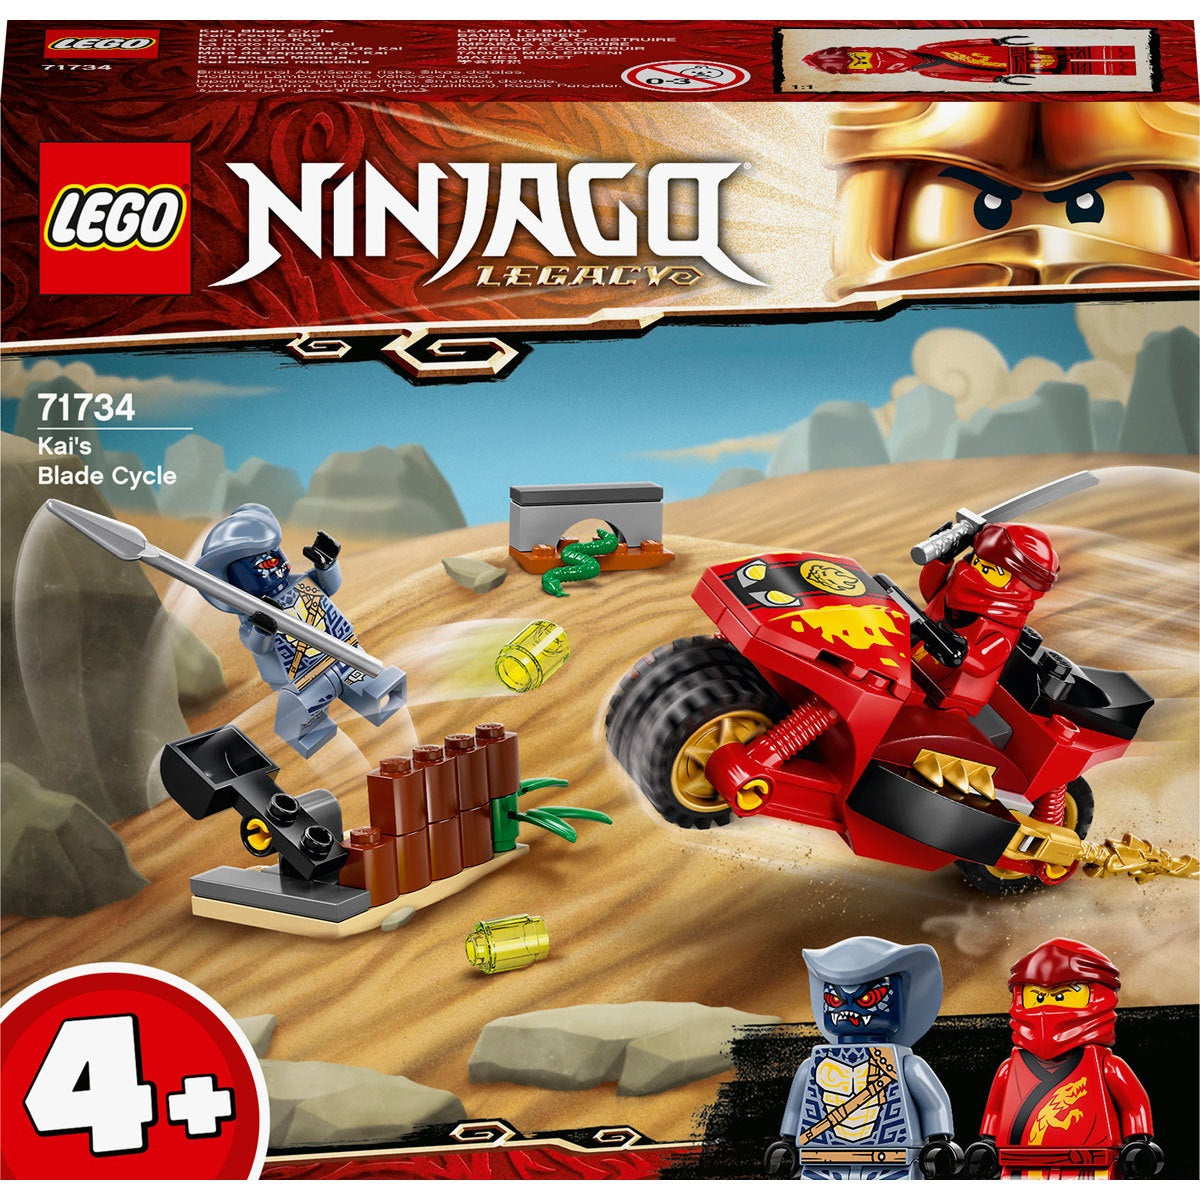 LEGO Ninjago Kai's Blade Cycle - 71734